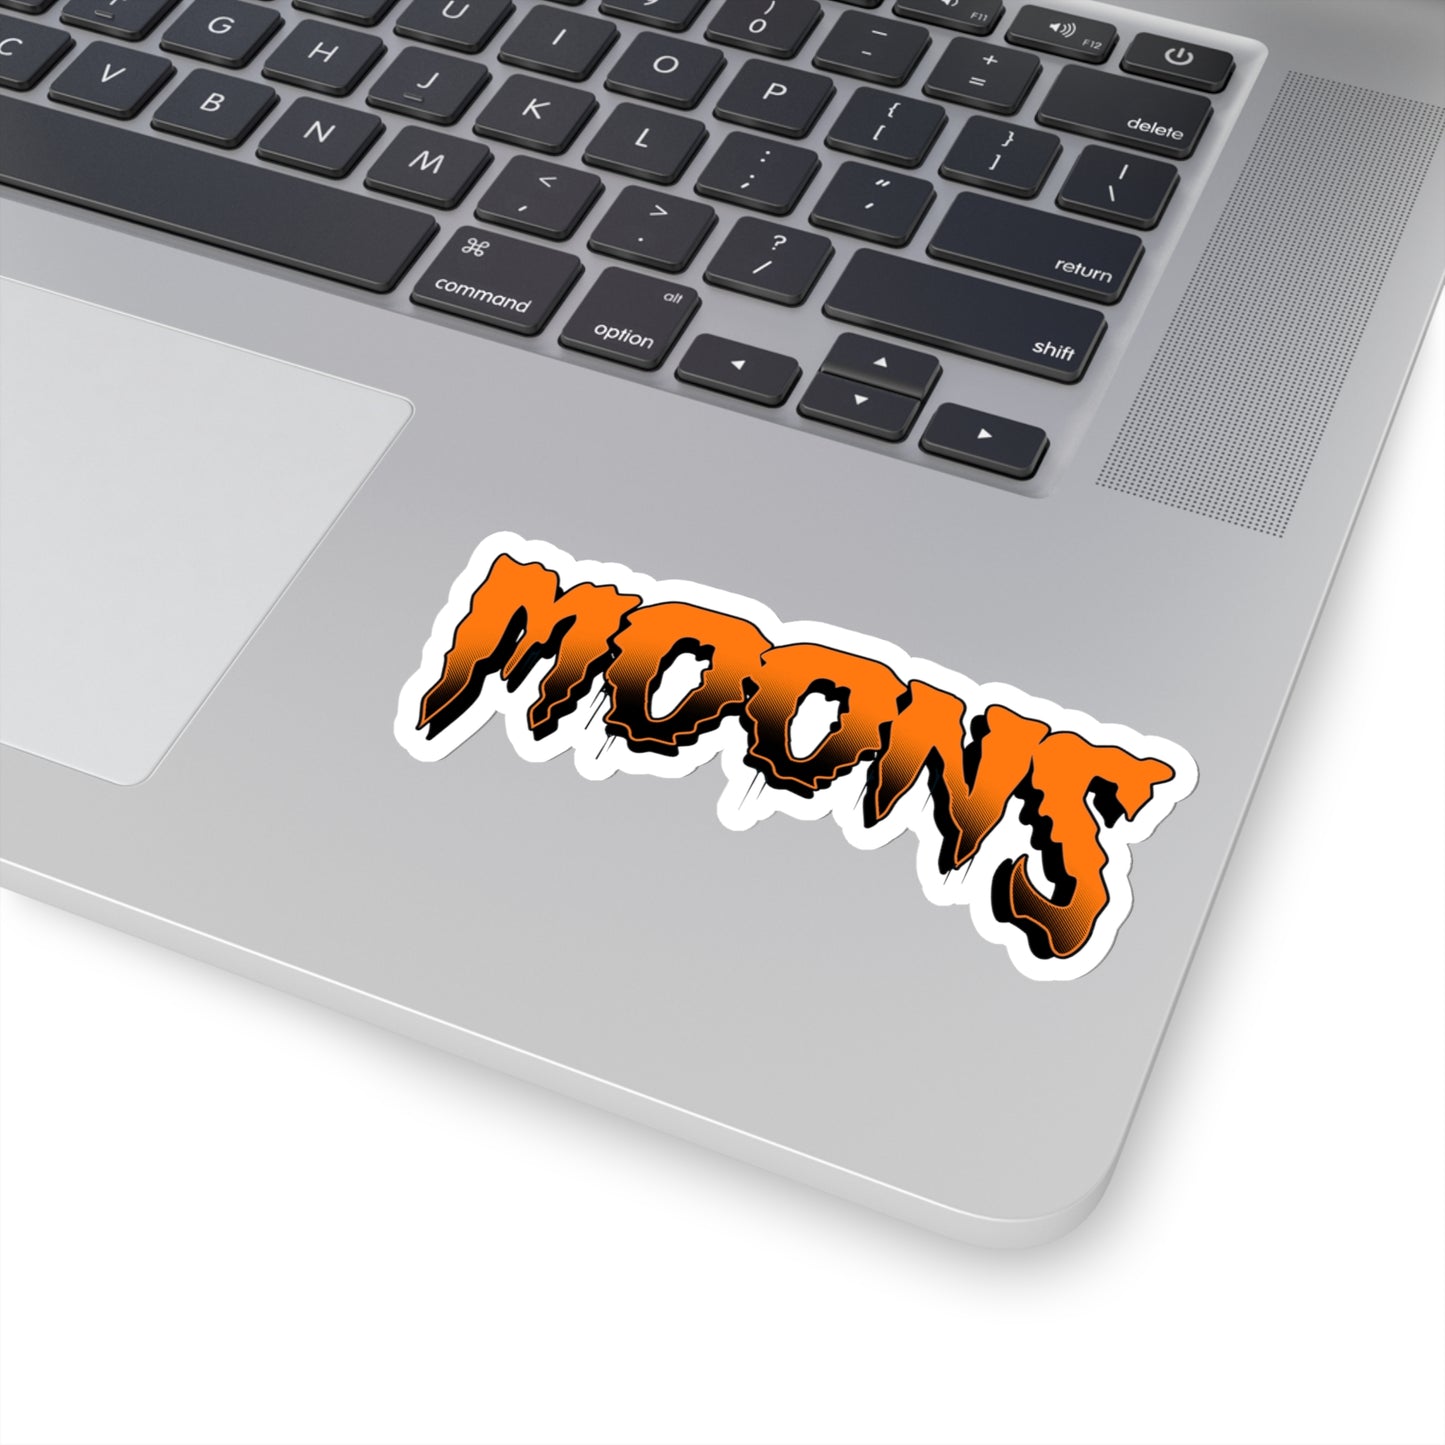 MOONS 2023 Headless Horsemen Halloween Release - Orange Die Cut Sticker